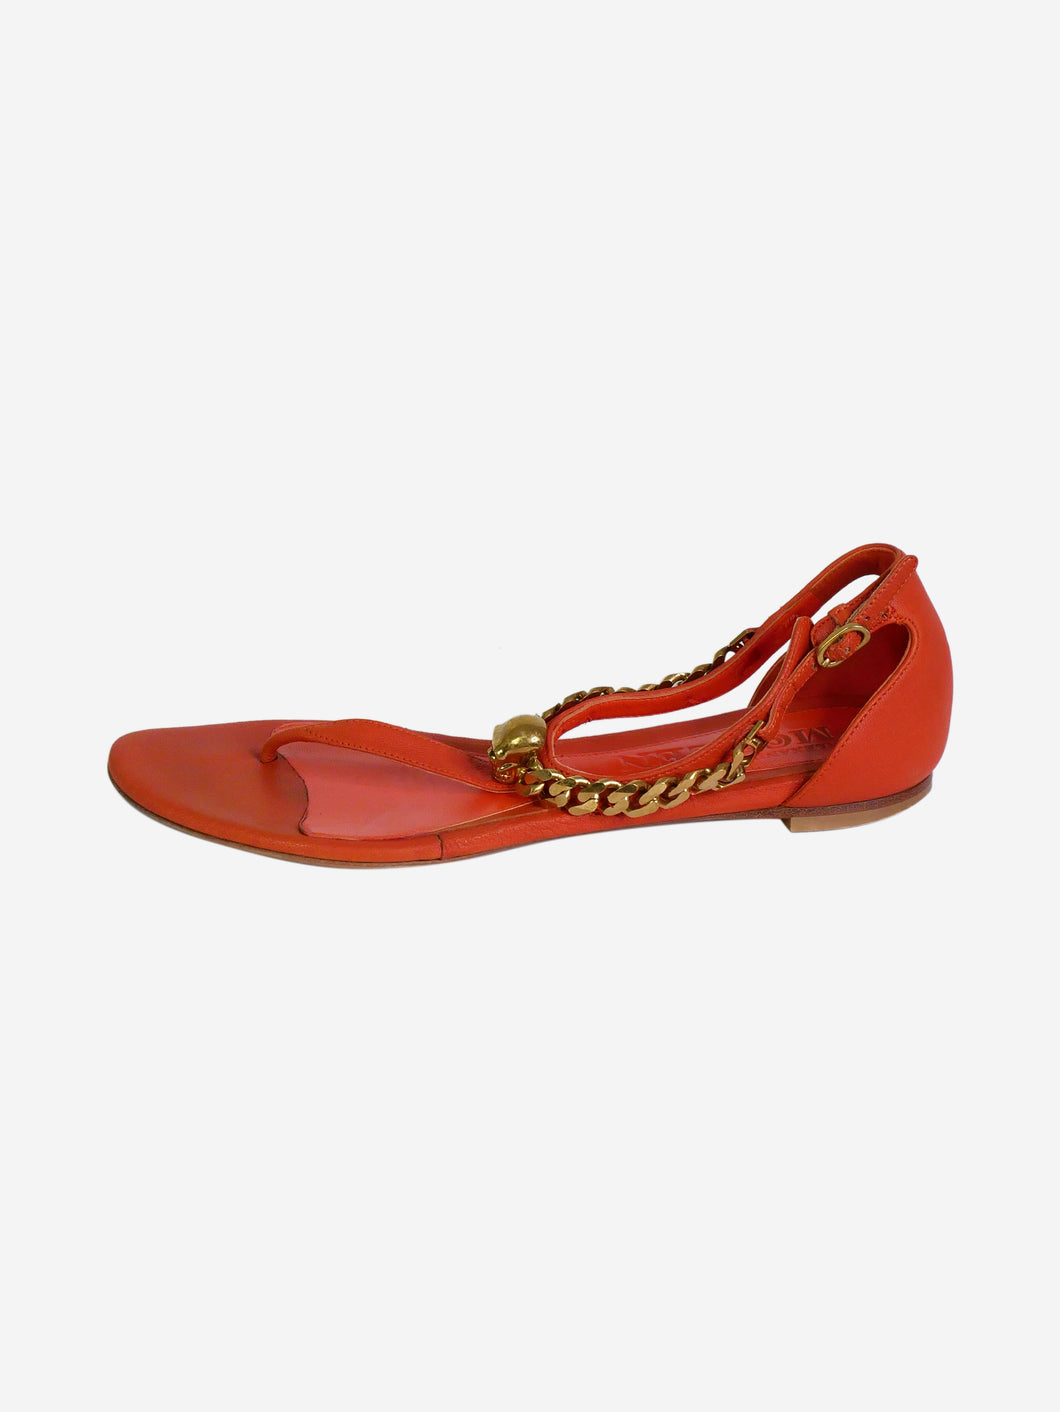 Orange thong sandals with gold skull chain - size EU 37.5 Flat Sandals Alexander McQueen 